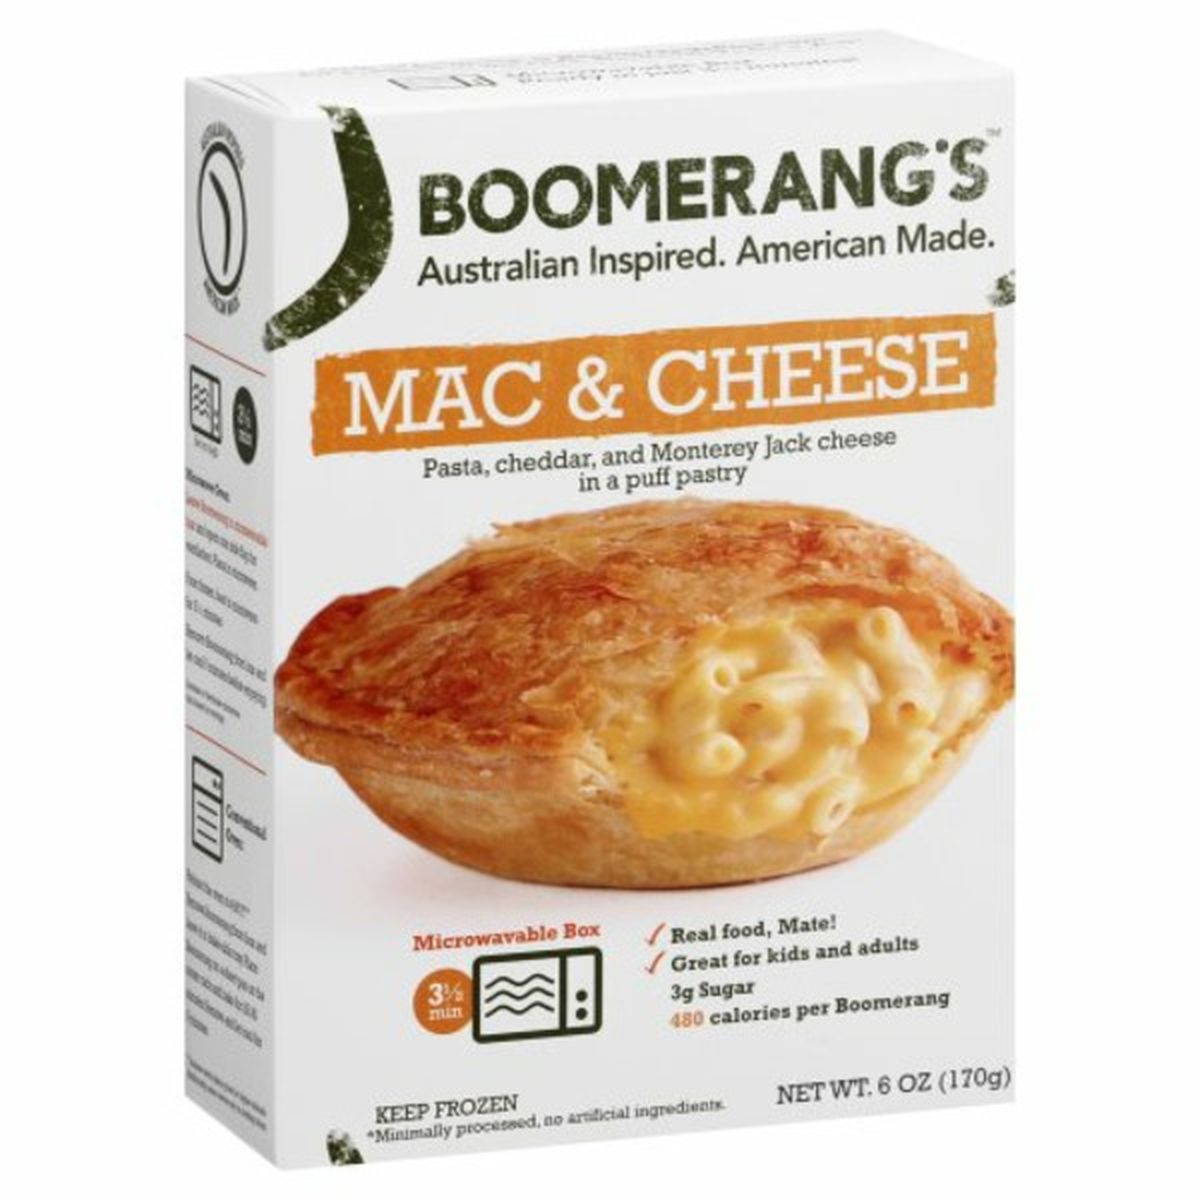 Calories in Boomerang's Pie, Mac & Cheese